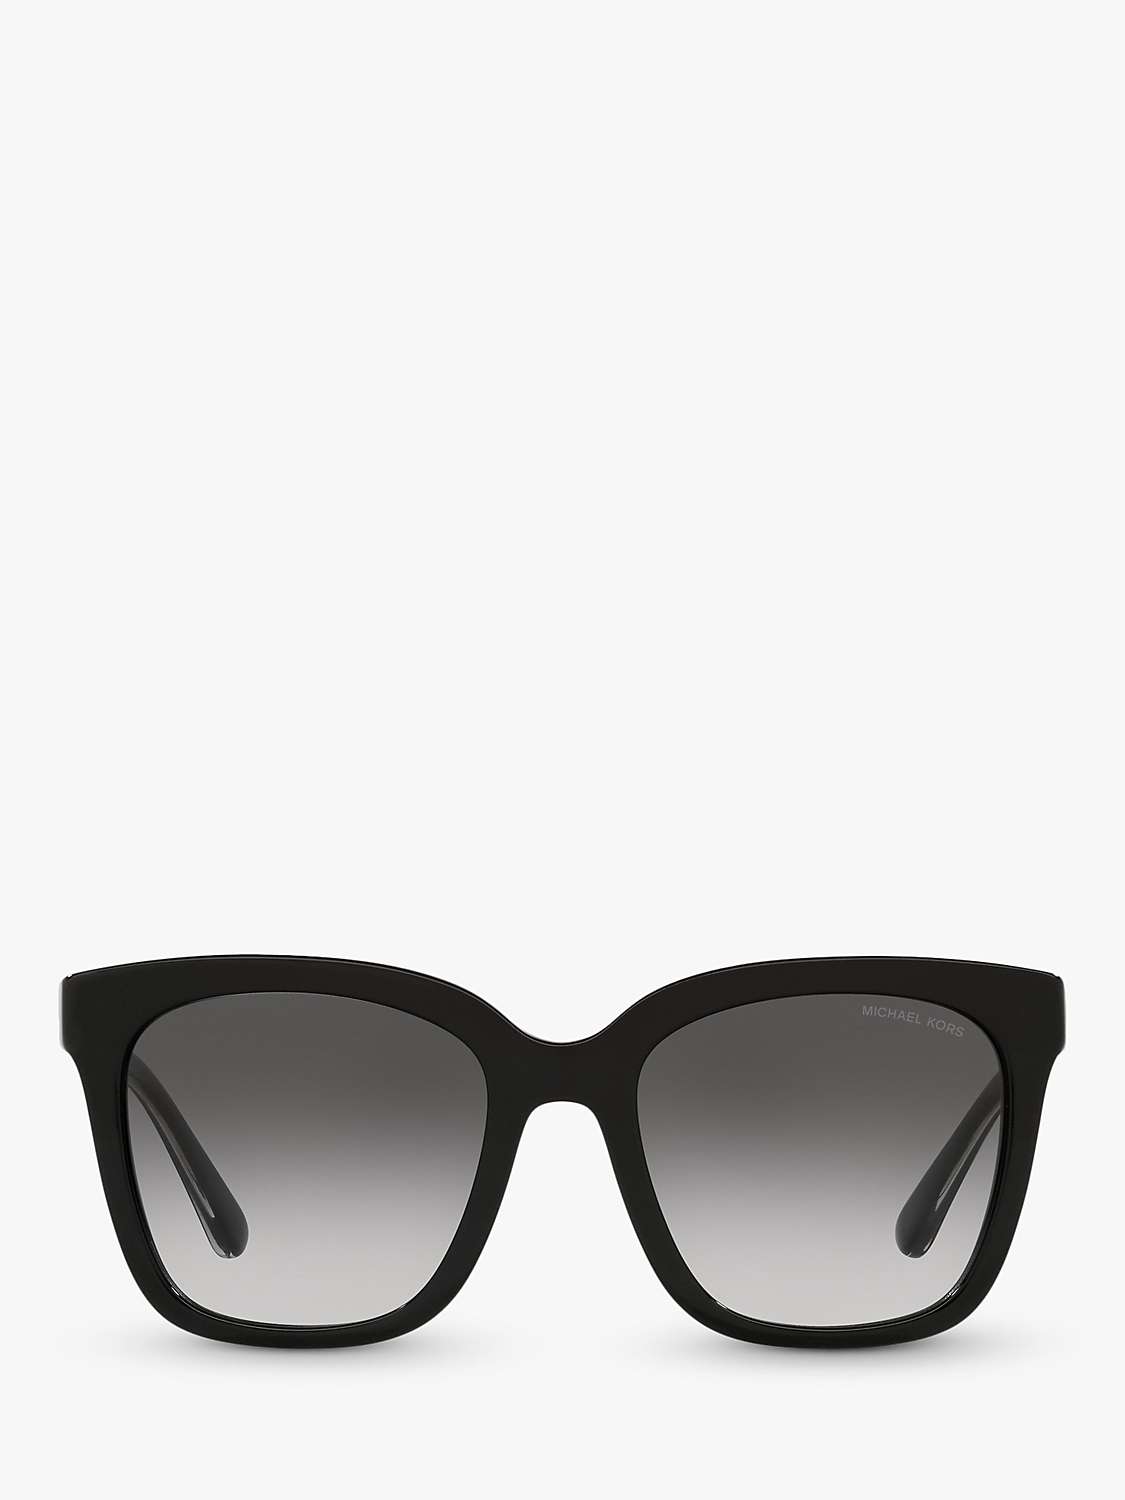 Buy Michael Kors MK2163 Women's San Marino Square Sunglasses Online at johnlewis.com